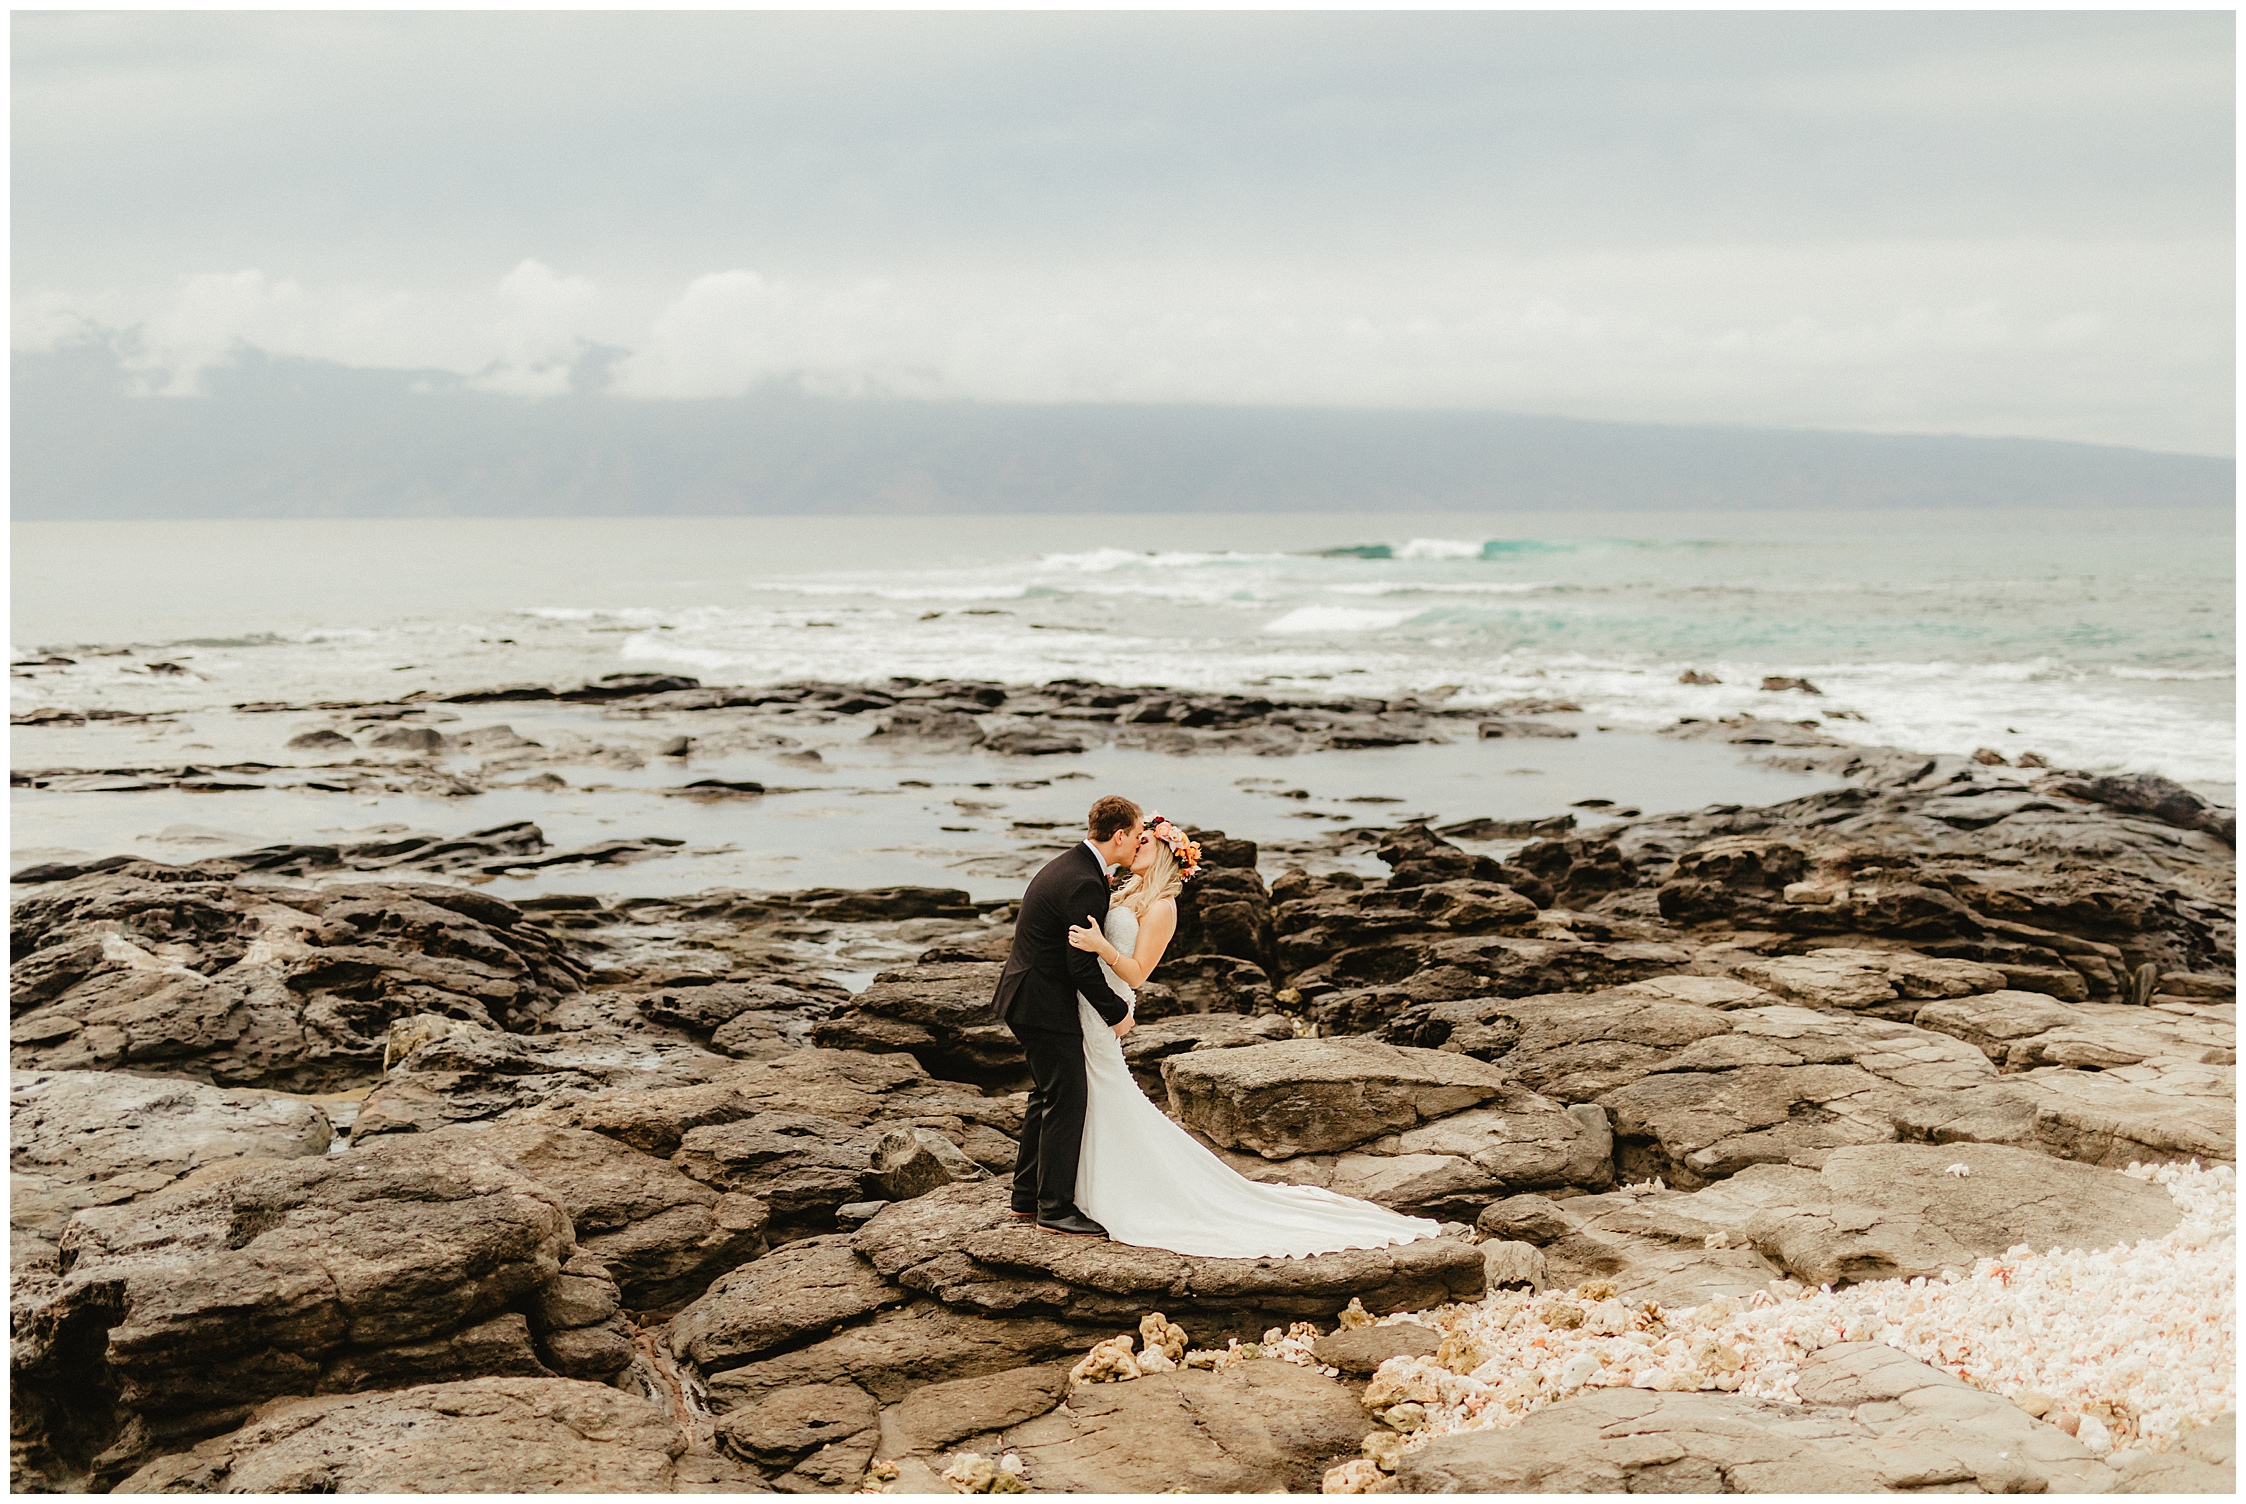 Maui Elopement | Maui Wedding Photographer